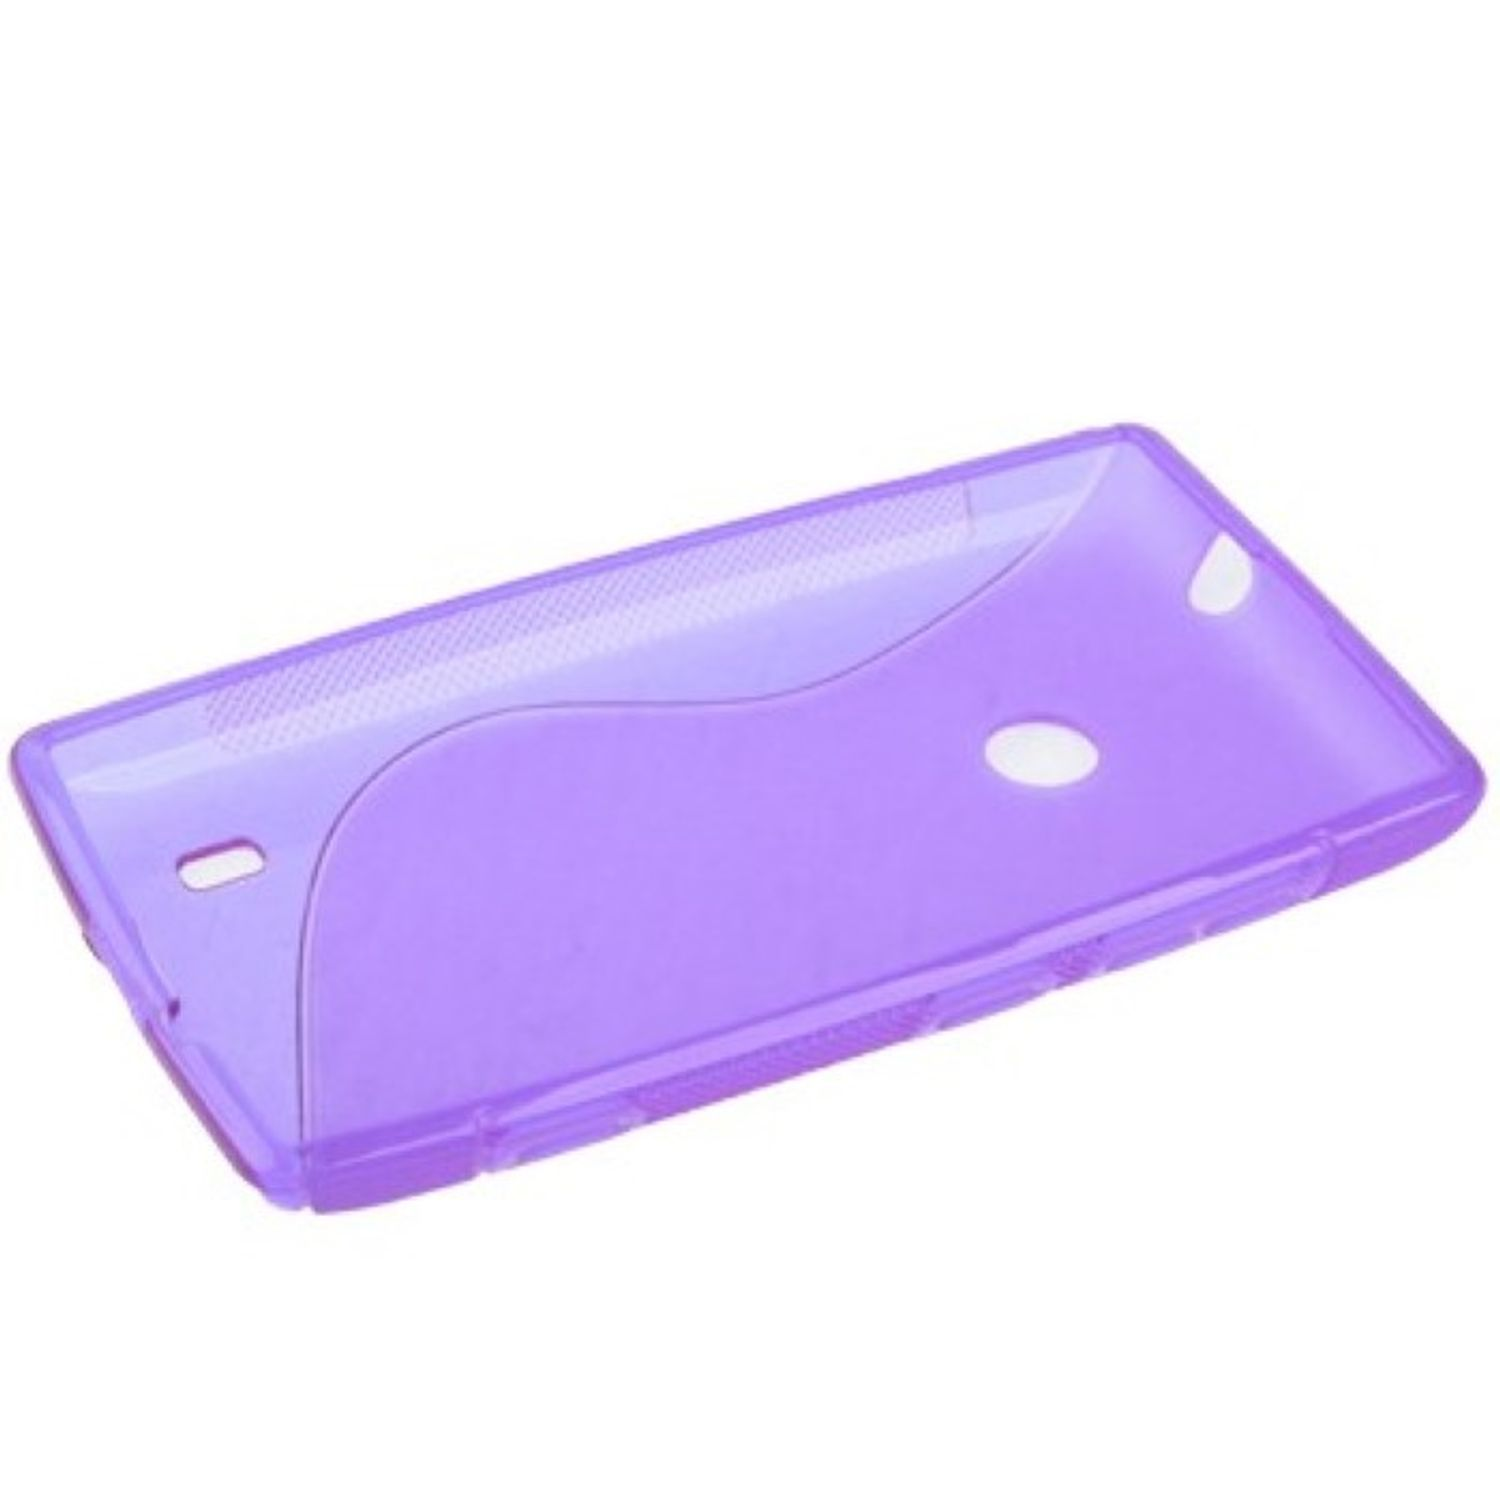 Backcover, Violett 520, DESIGN Nokia, Handyhülle, KÖNIG Lumia